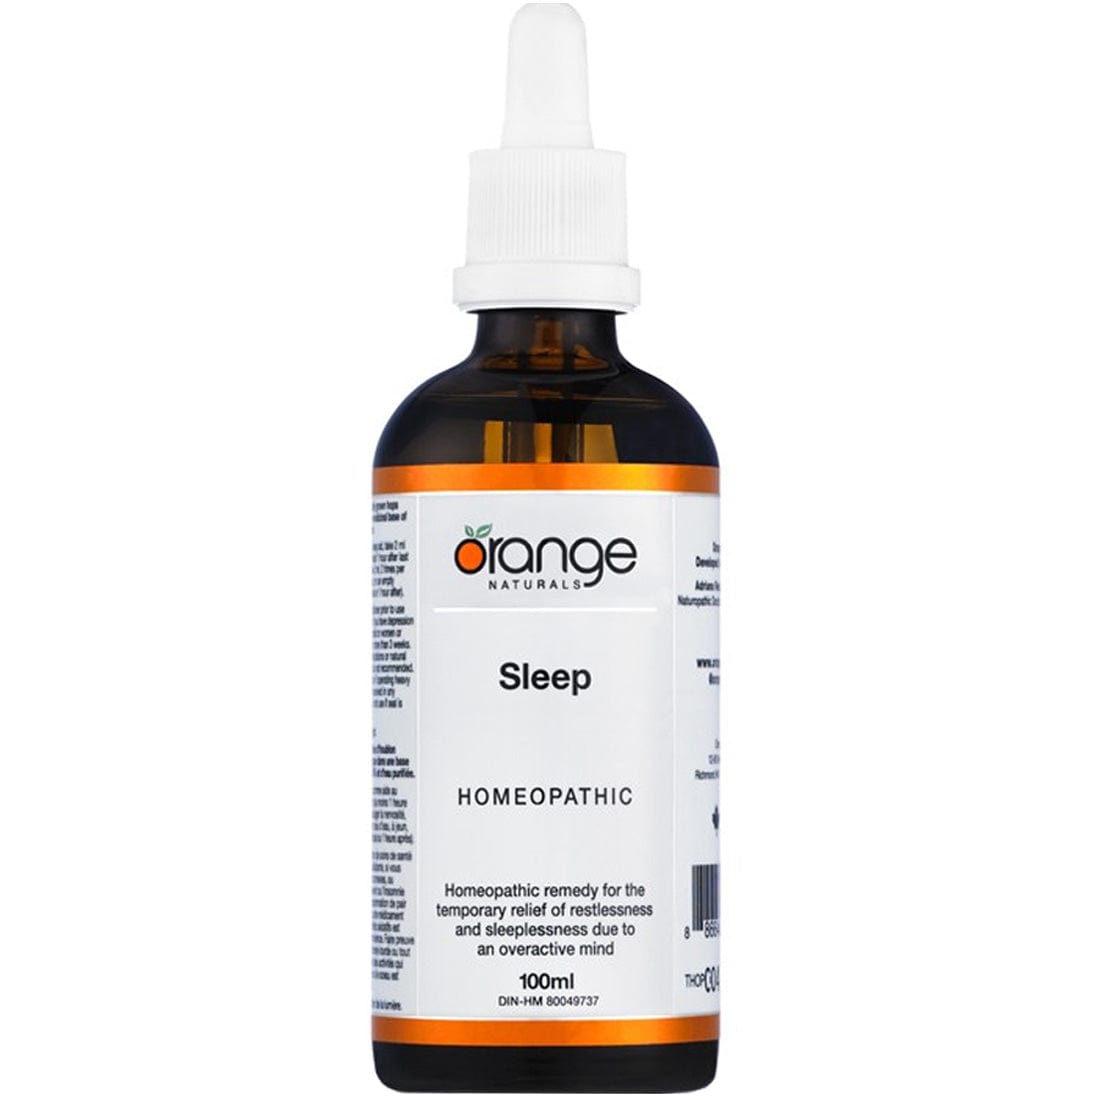 Orange Naturals Sleep Homeopathic Remedy, 100ml